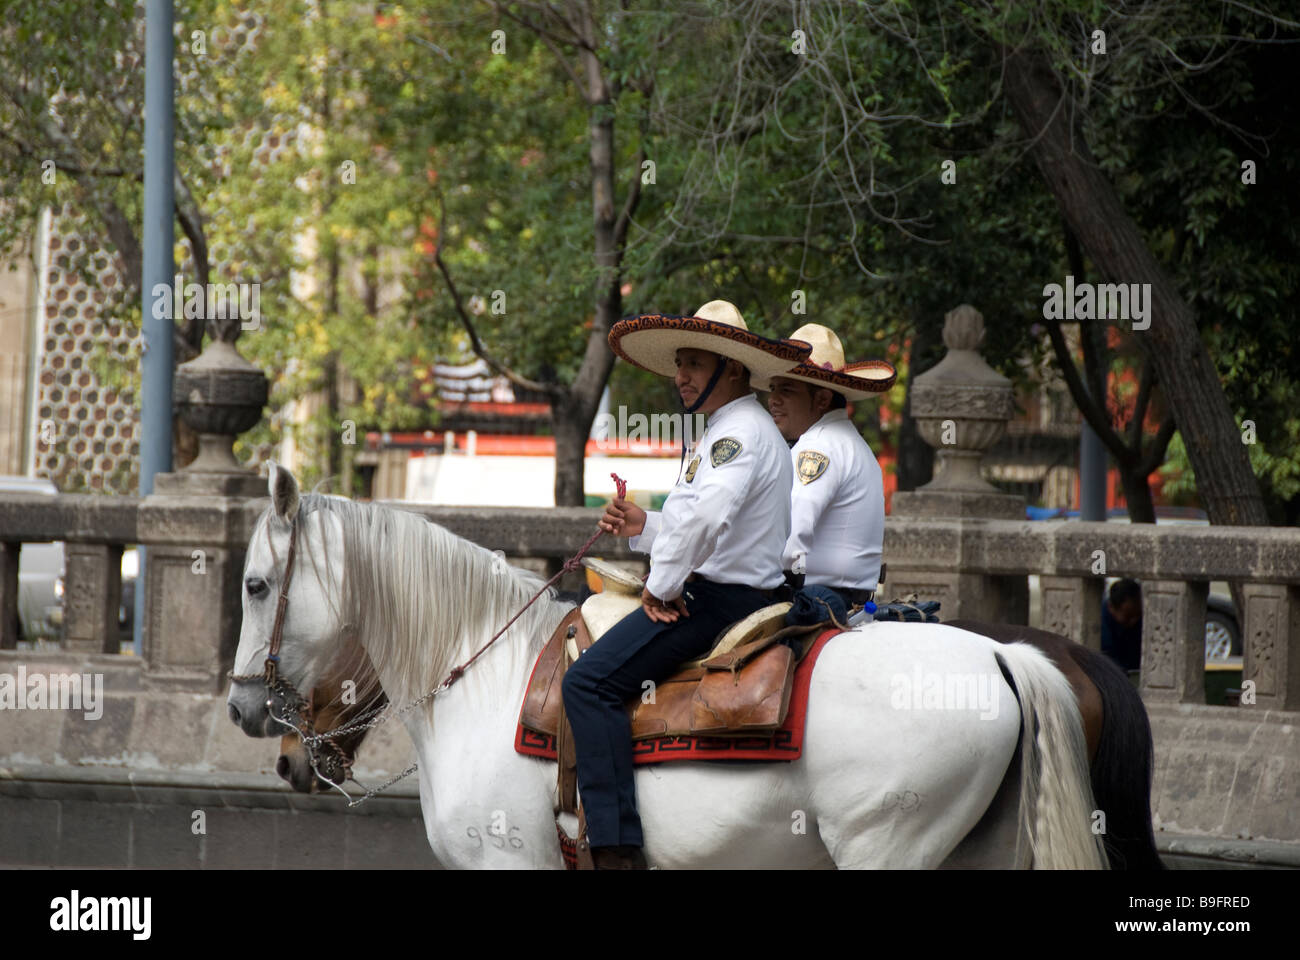 Mexico city, street shots, policemen Stock Photo